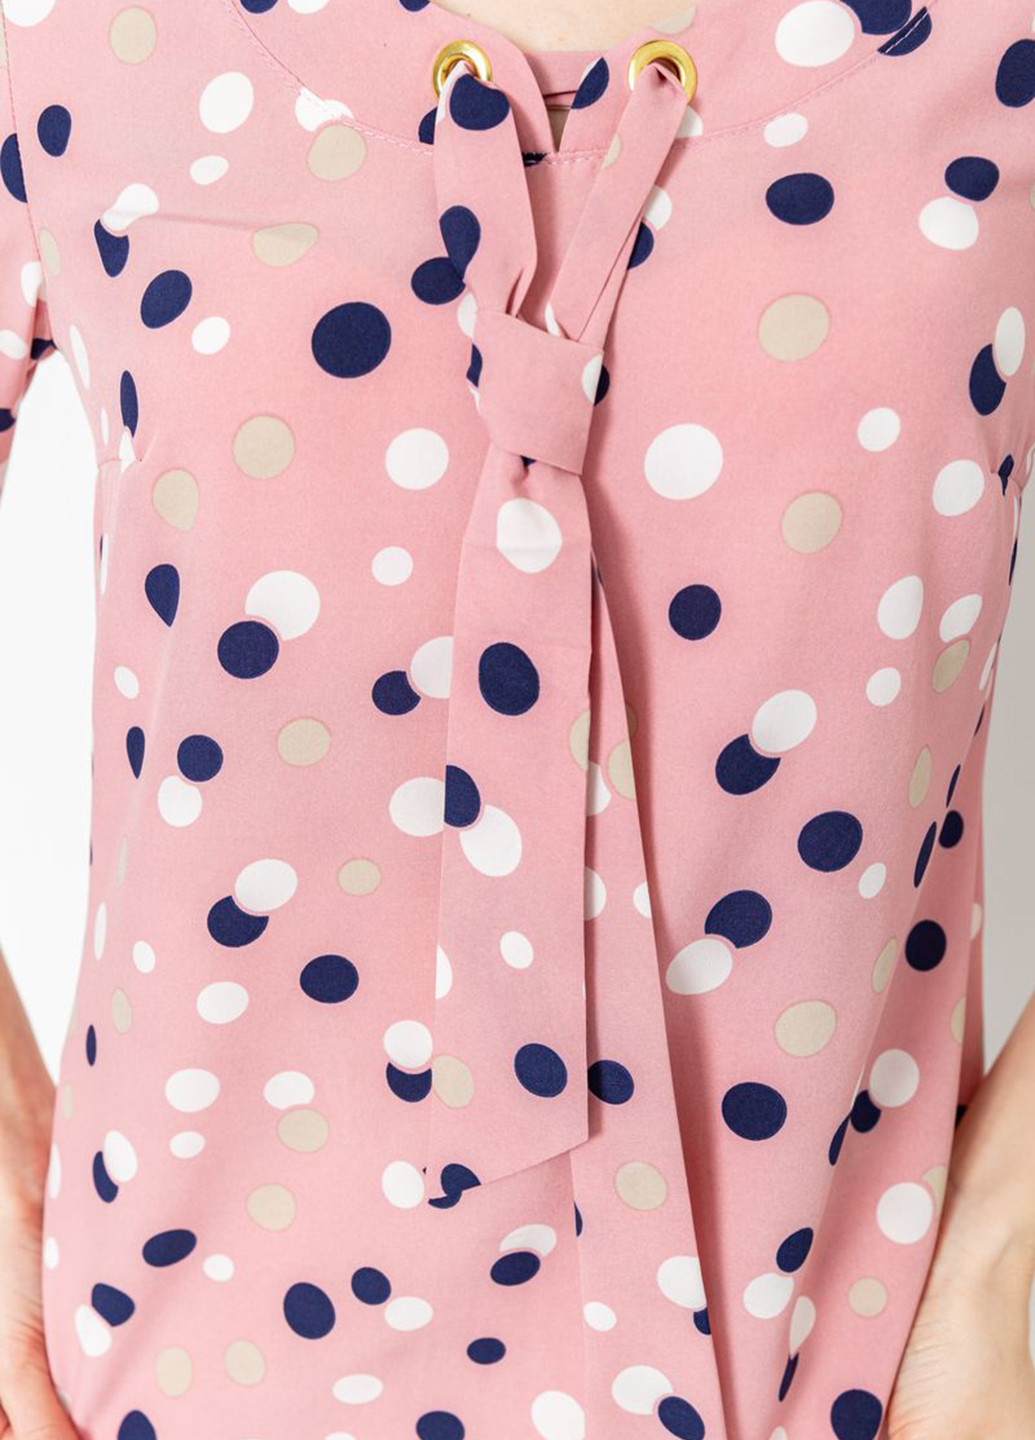 Светло-розовая демисезонная блуза Ager